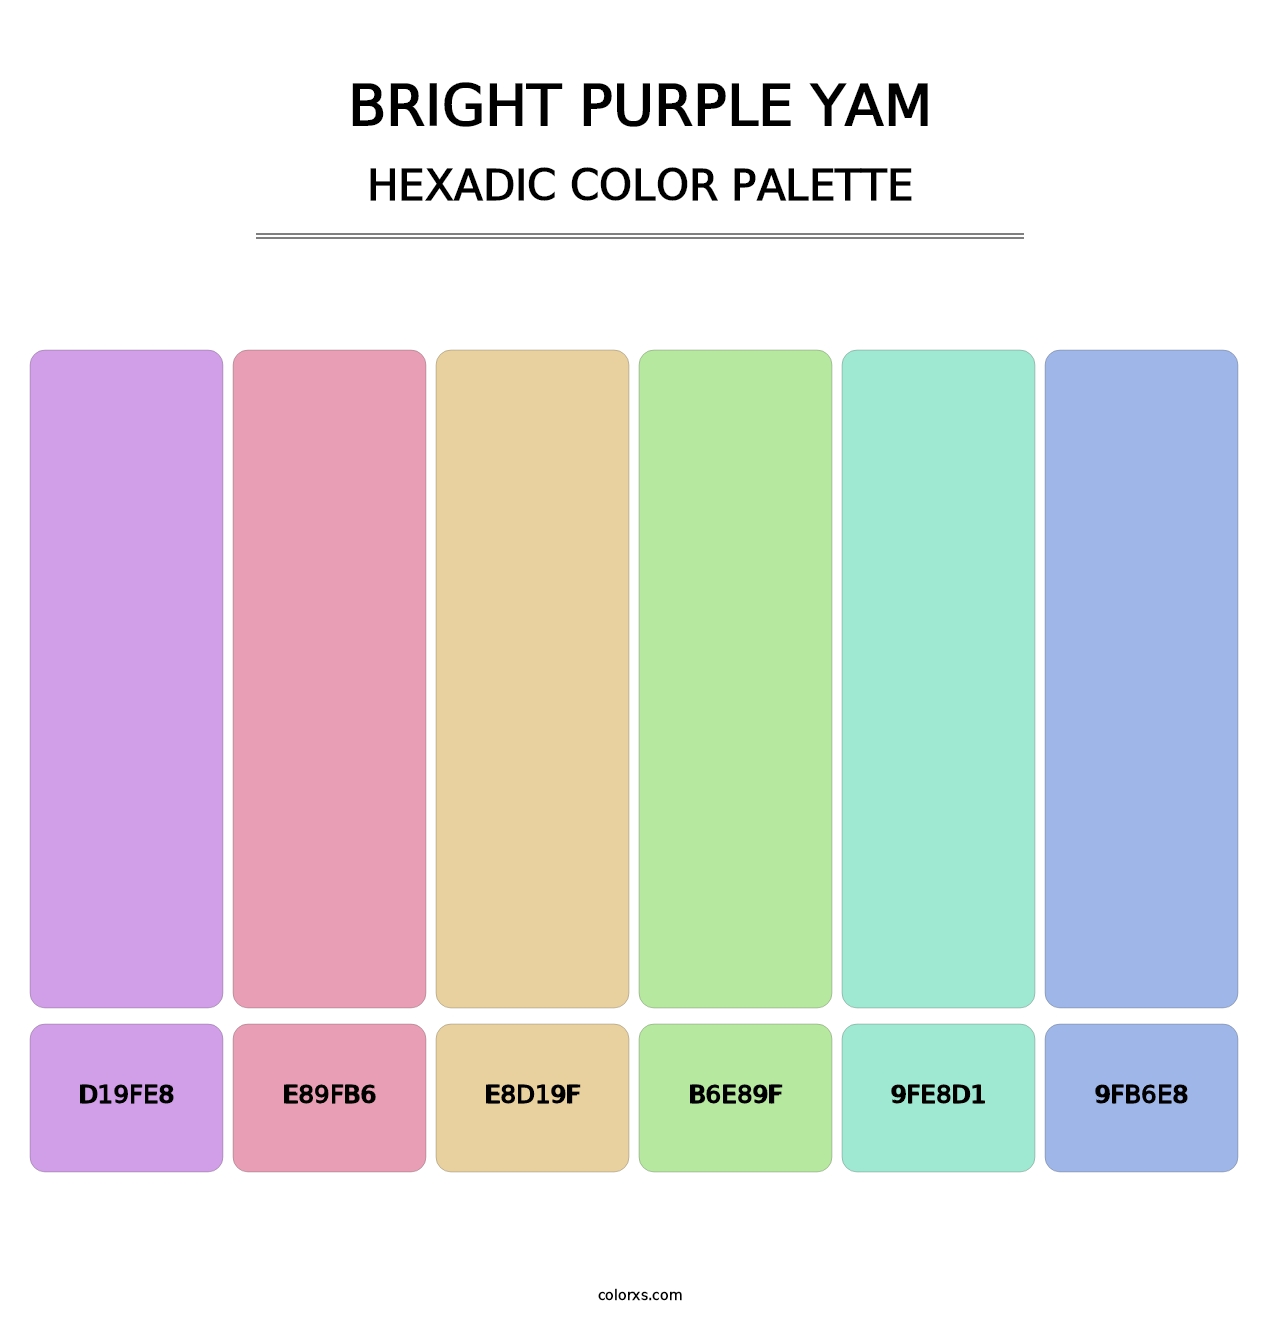 Bright Purple Yam - Hexadic Color Palette